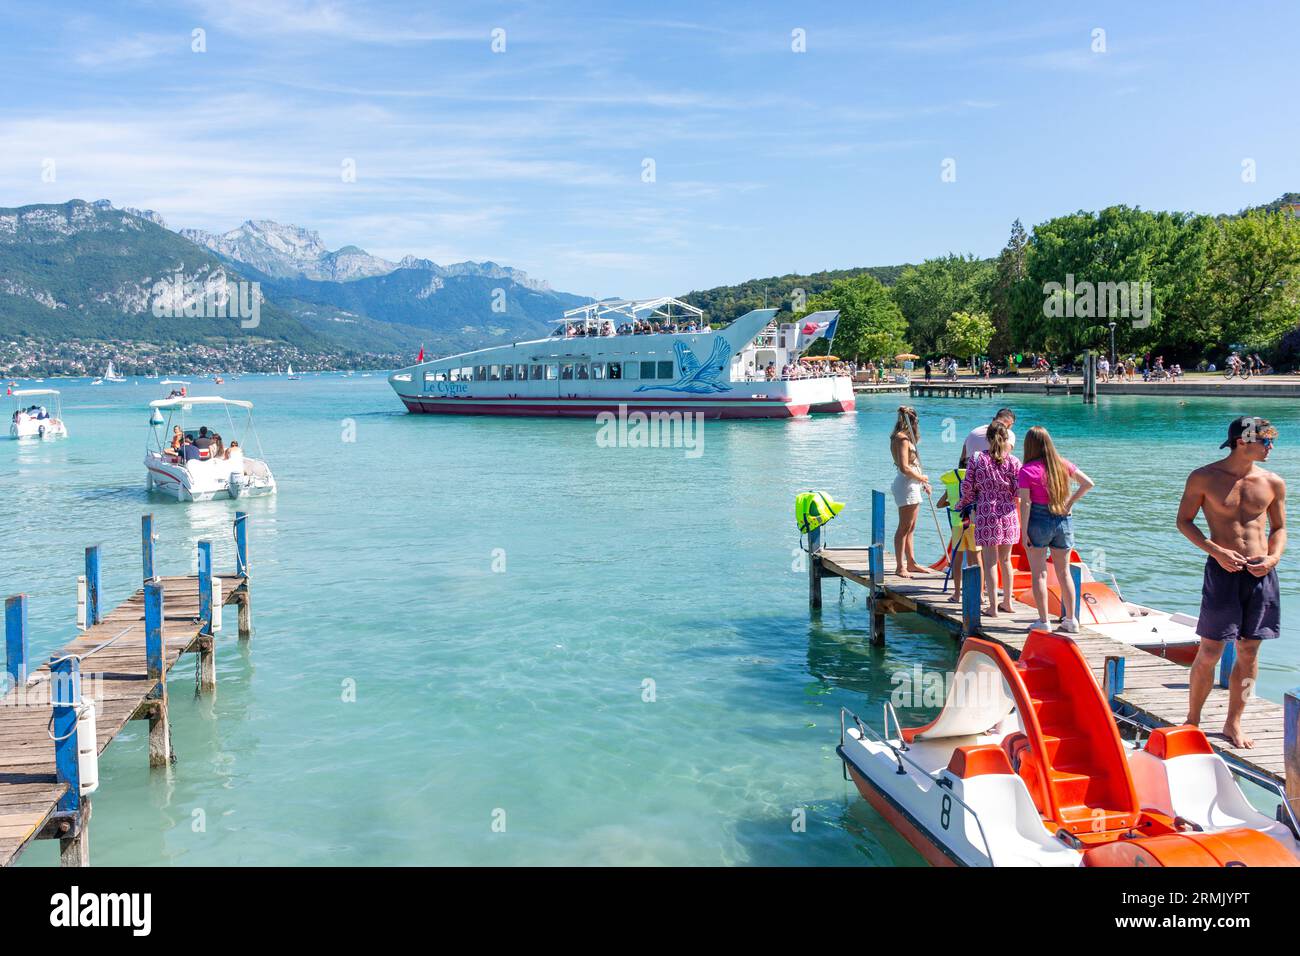 Le Cygne cruise boat on Lake Annecy (Lac d'Annecy), Annecy, Haute-Savoie, Auvergne-Rhône-Alpes, France Stock Photo